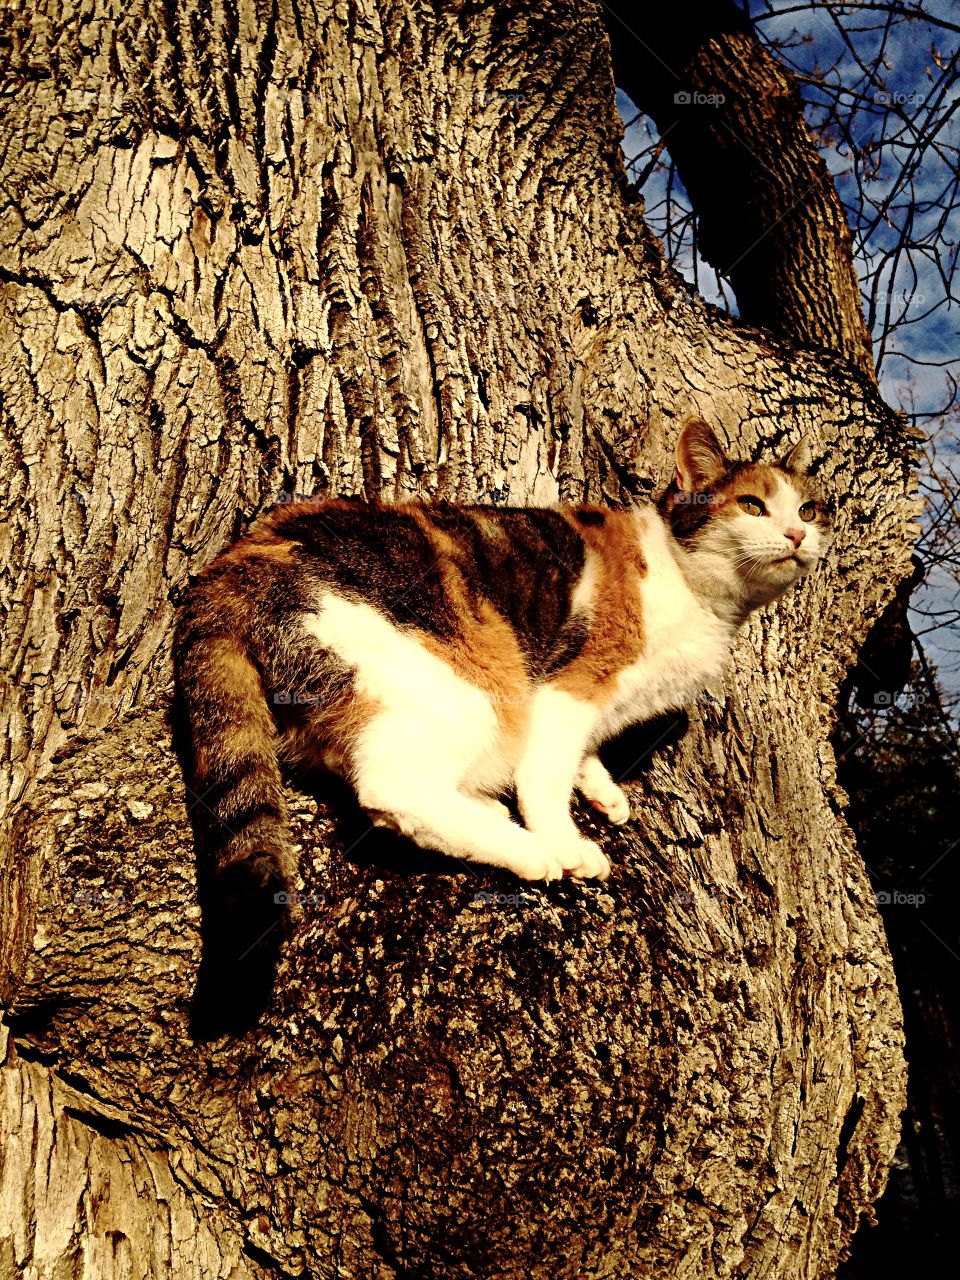 Cat up tree. Cat climbing tree at sunset